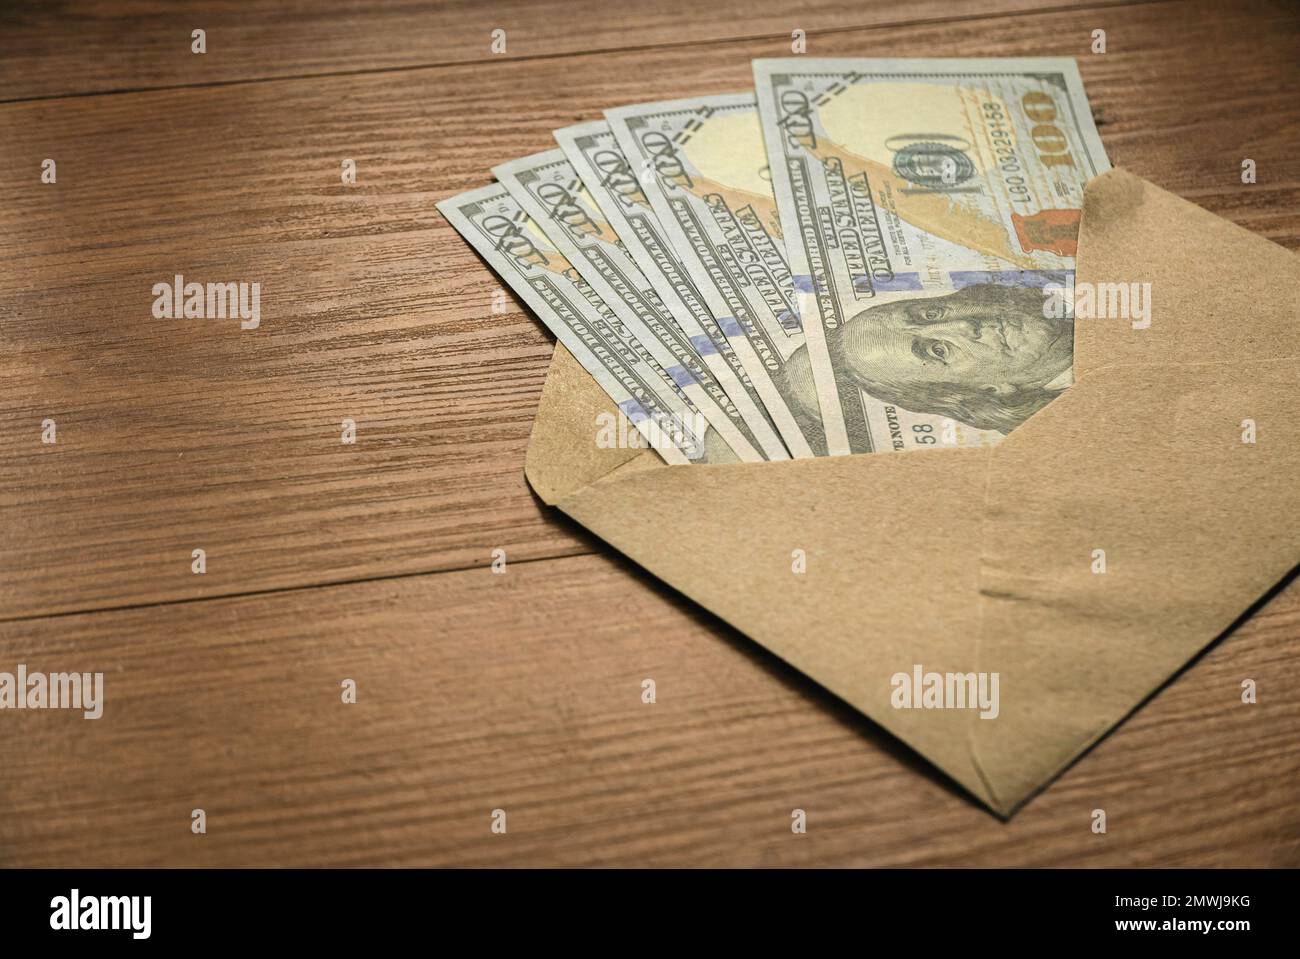 A money inside an envelope.Bonus, reward, income, benefit or bribery concept. Stock Photo